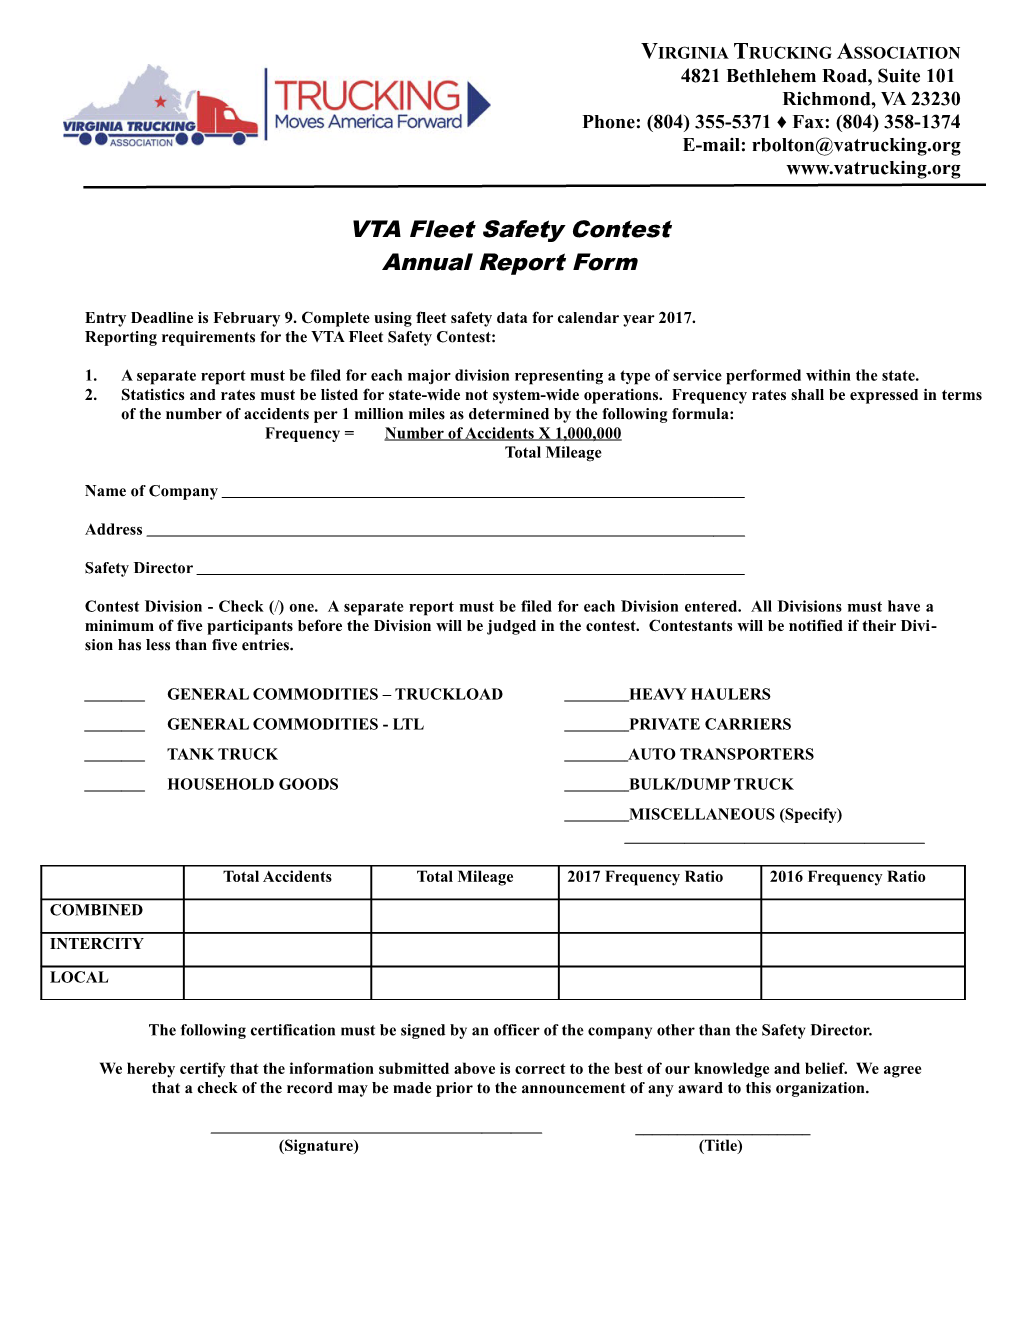 VTA Fleet Safety Contest